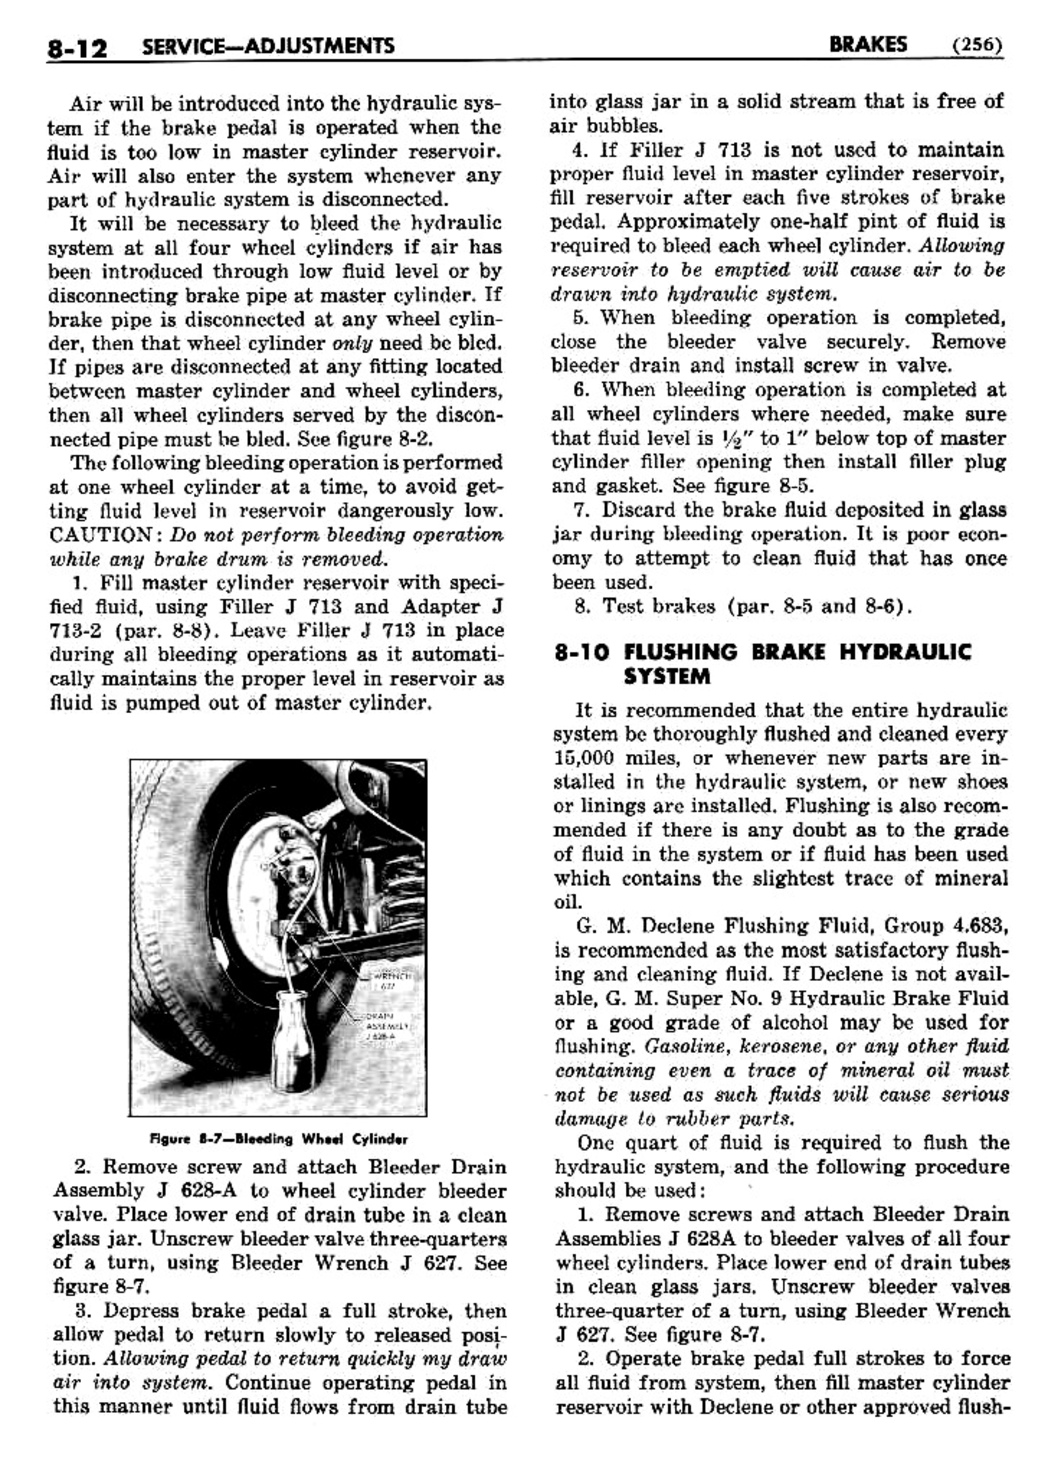 n_09 1948 Buick Shop Manual - Brakes-012-012.jpg